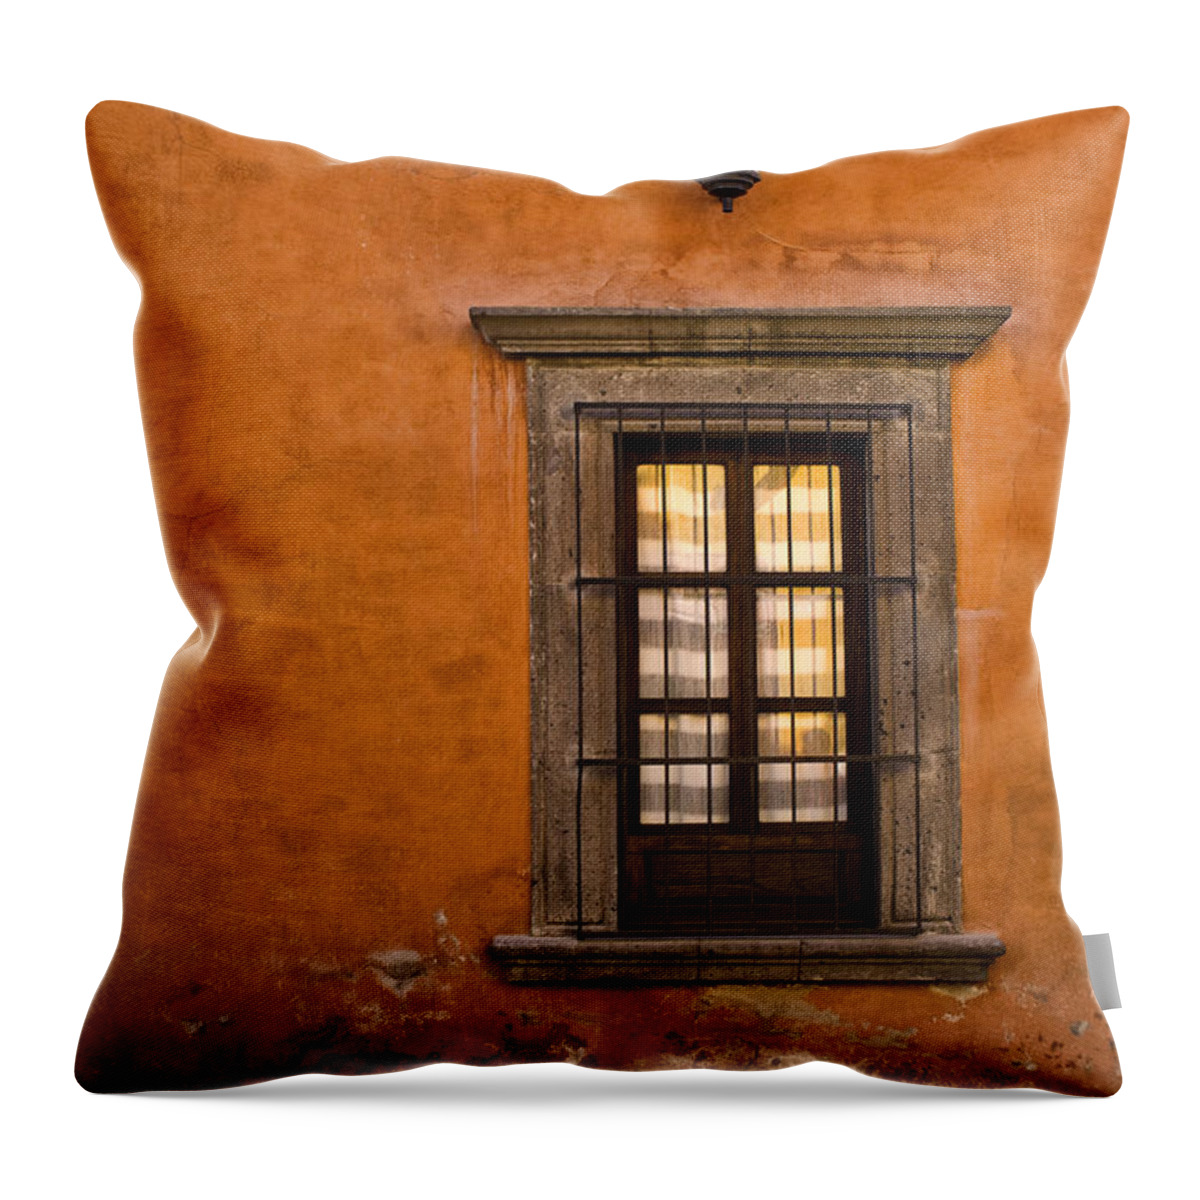 Mexico Throw Pillow featuring the photograph Golden Window Mexico by Carol Leigh